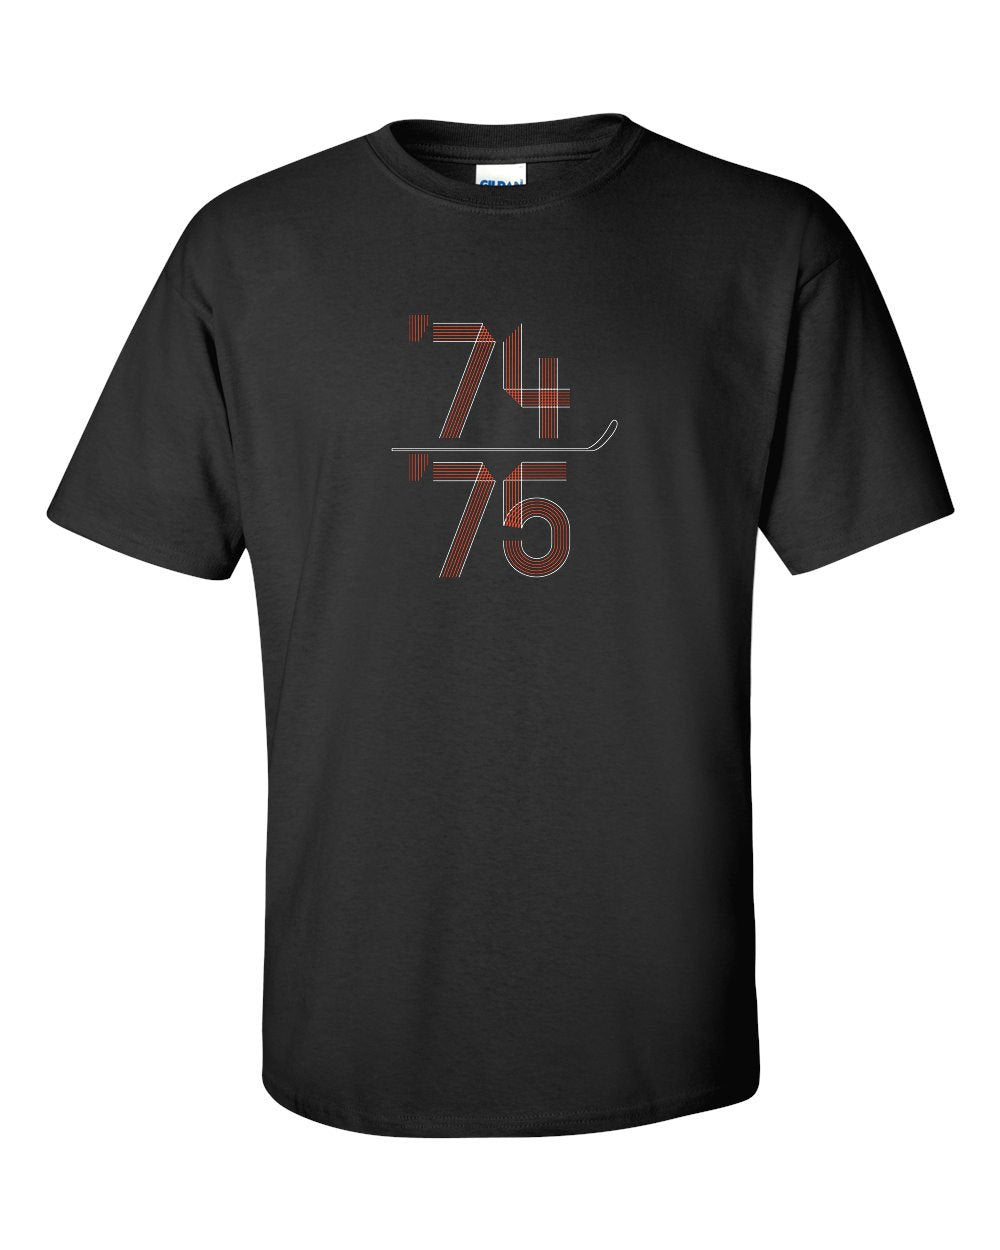 74-75 Mens/Unisex T-Shirt